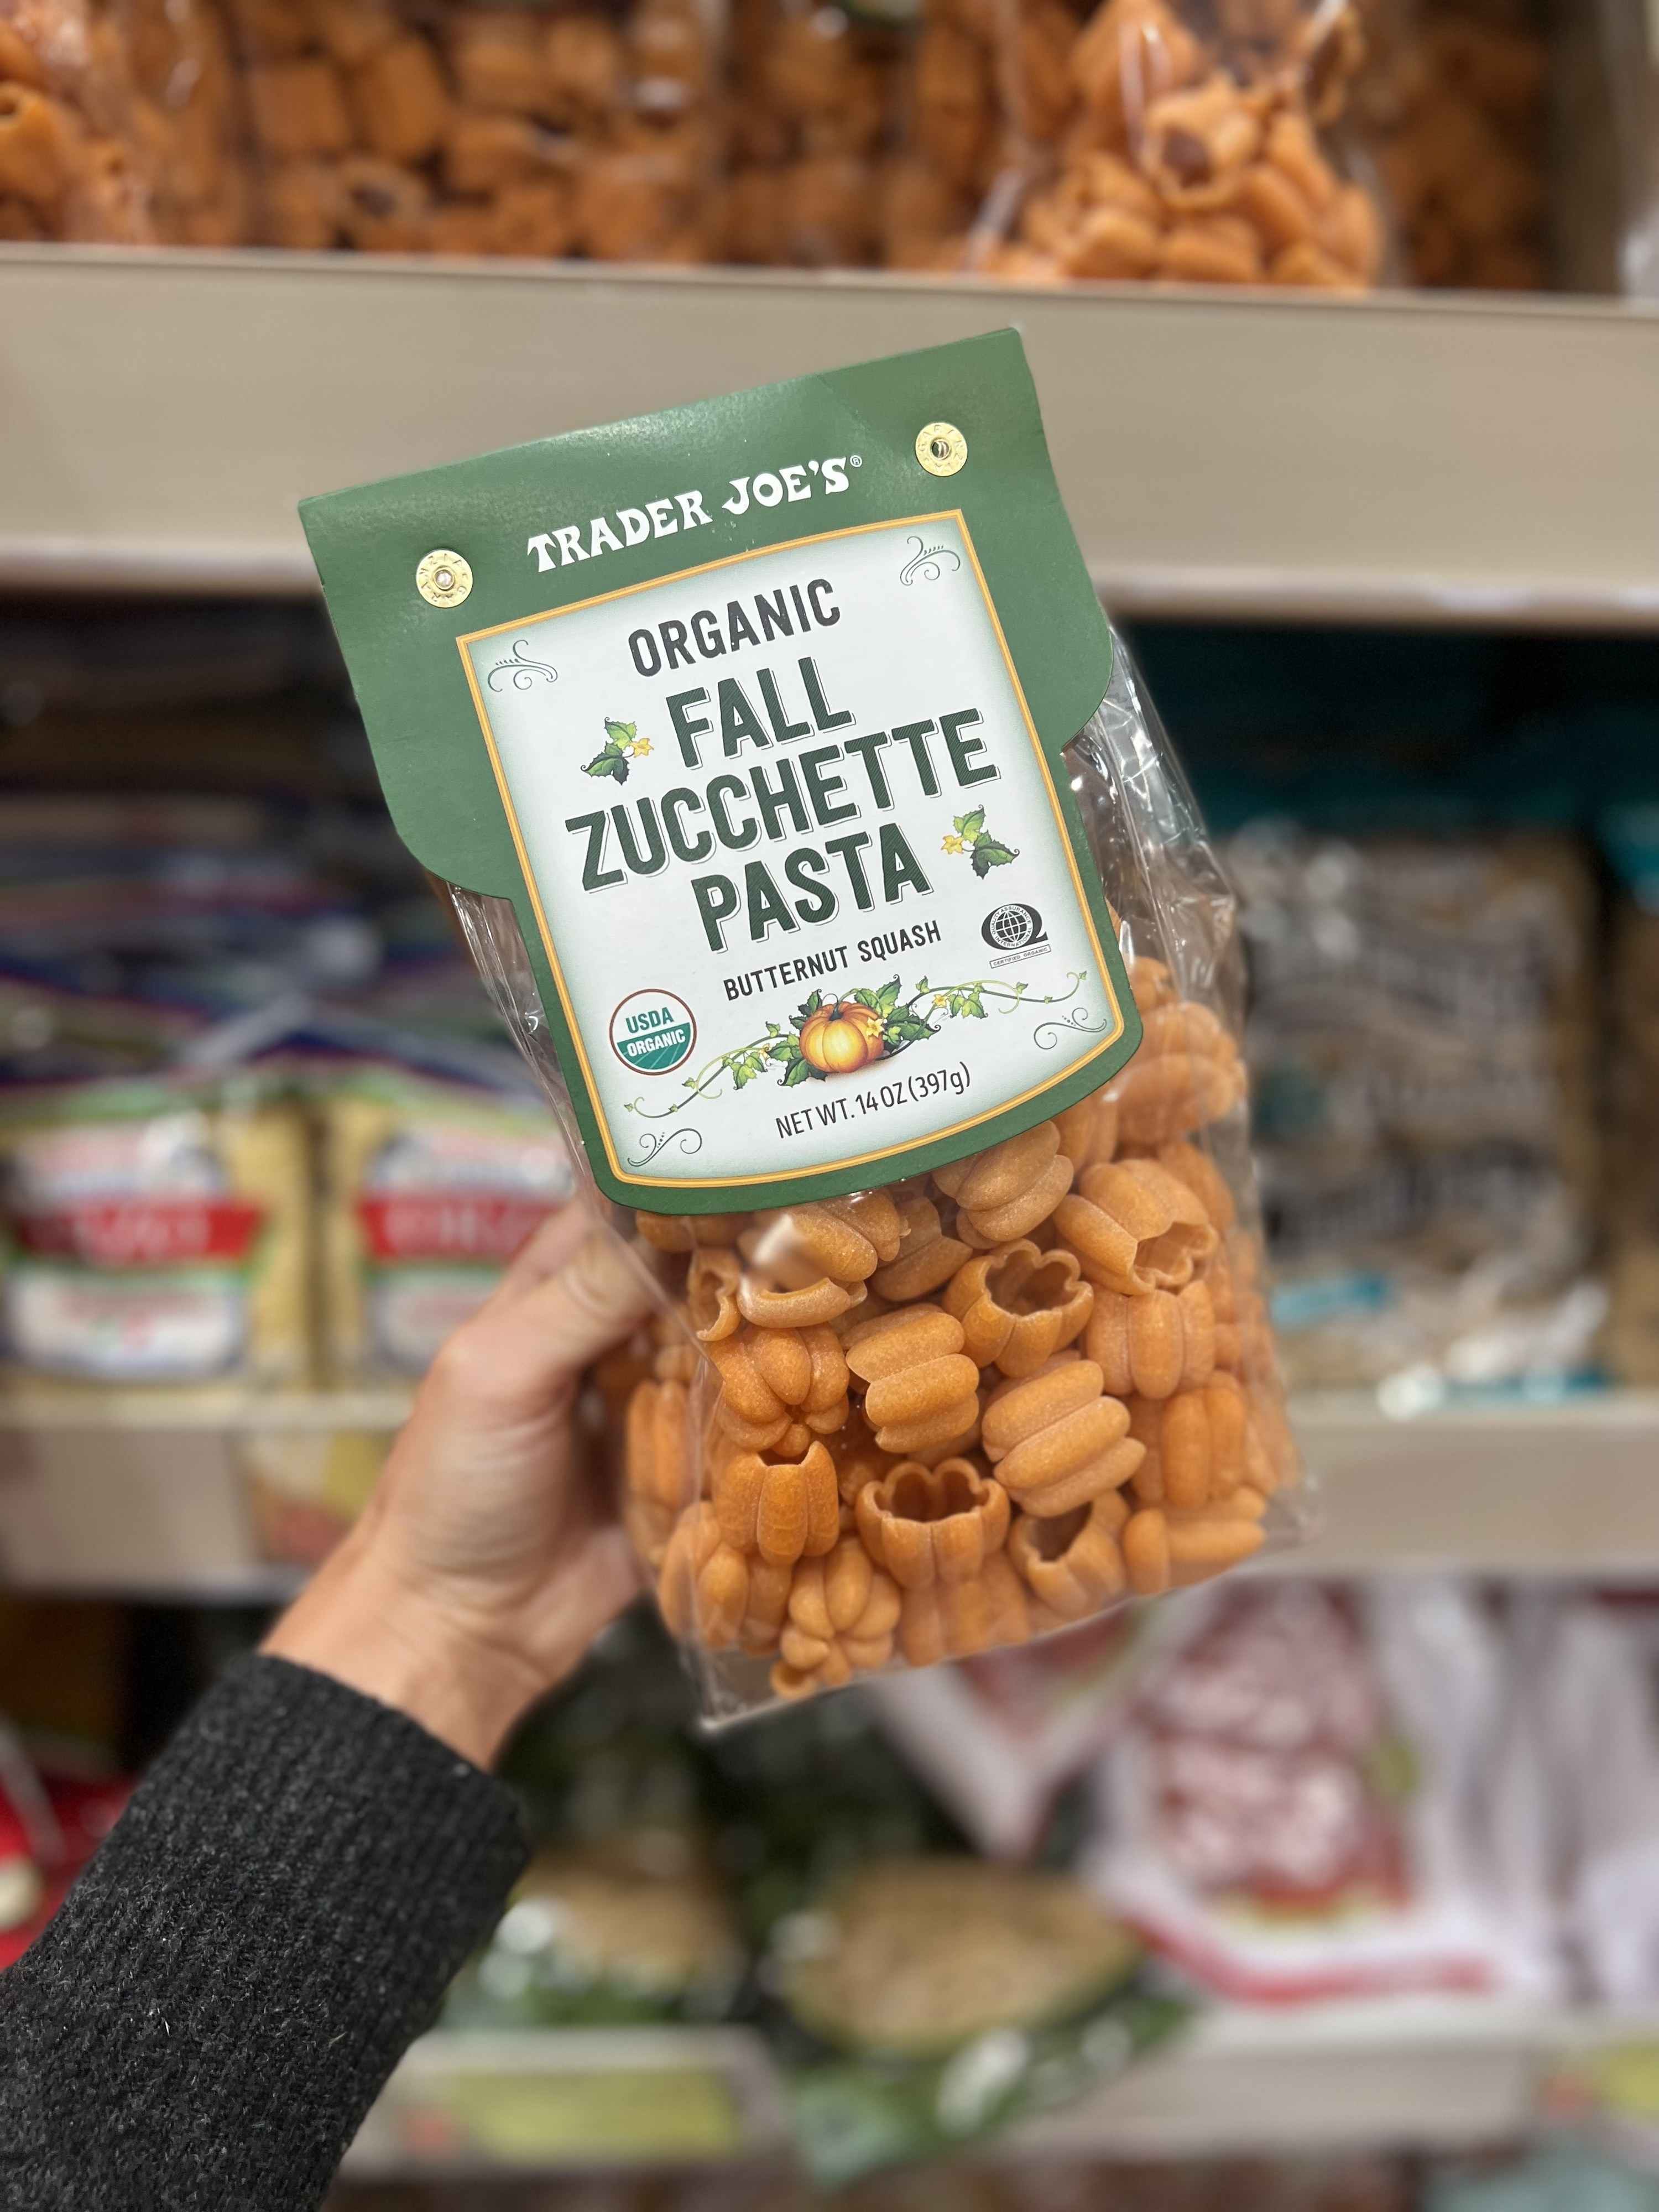 A bag of Fall Zucchette Pasta